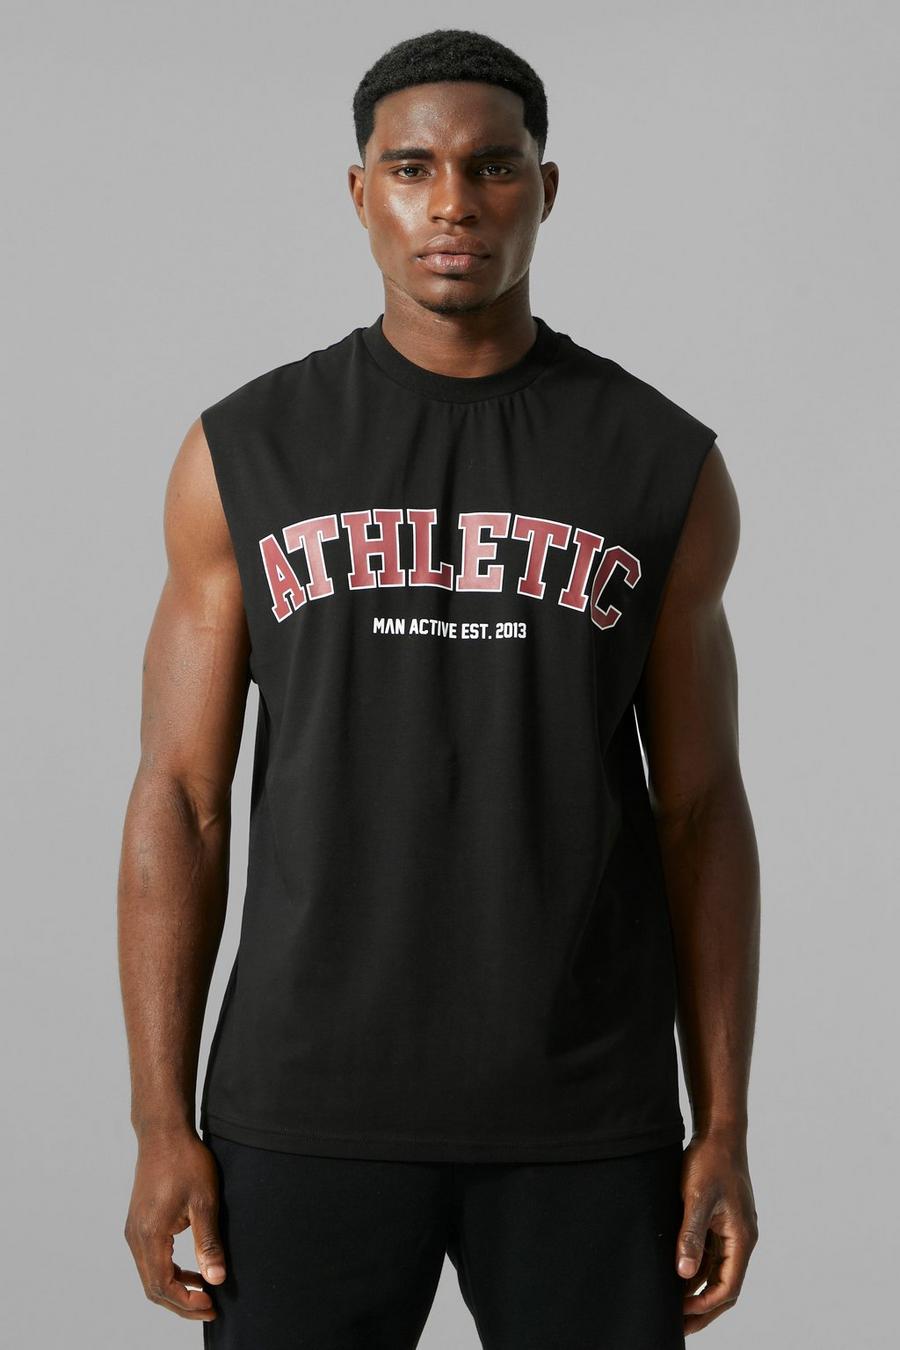 Man Active Gym Athletic Tanktop, Black schwarz